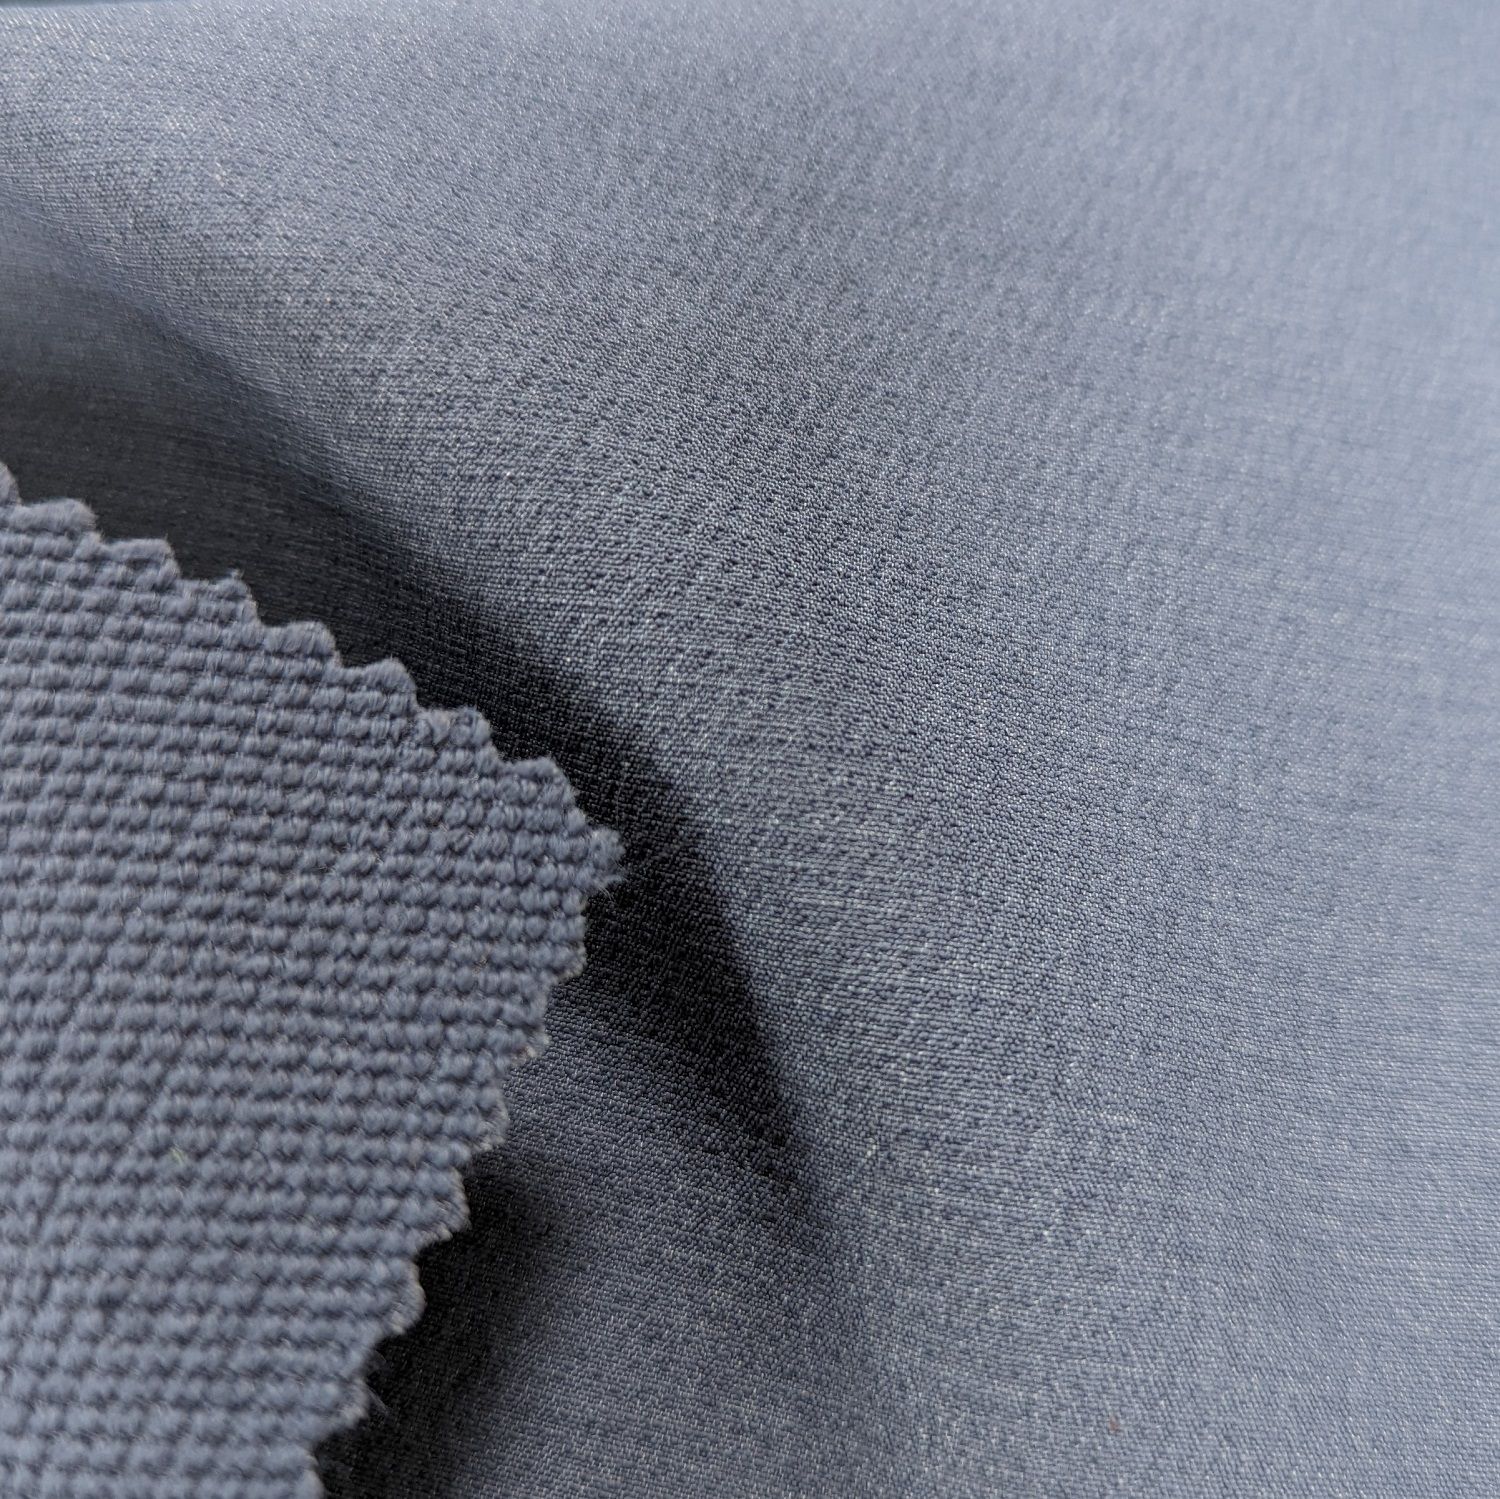 Nylon High Tenacity Durable Water Repellent Fabric